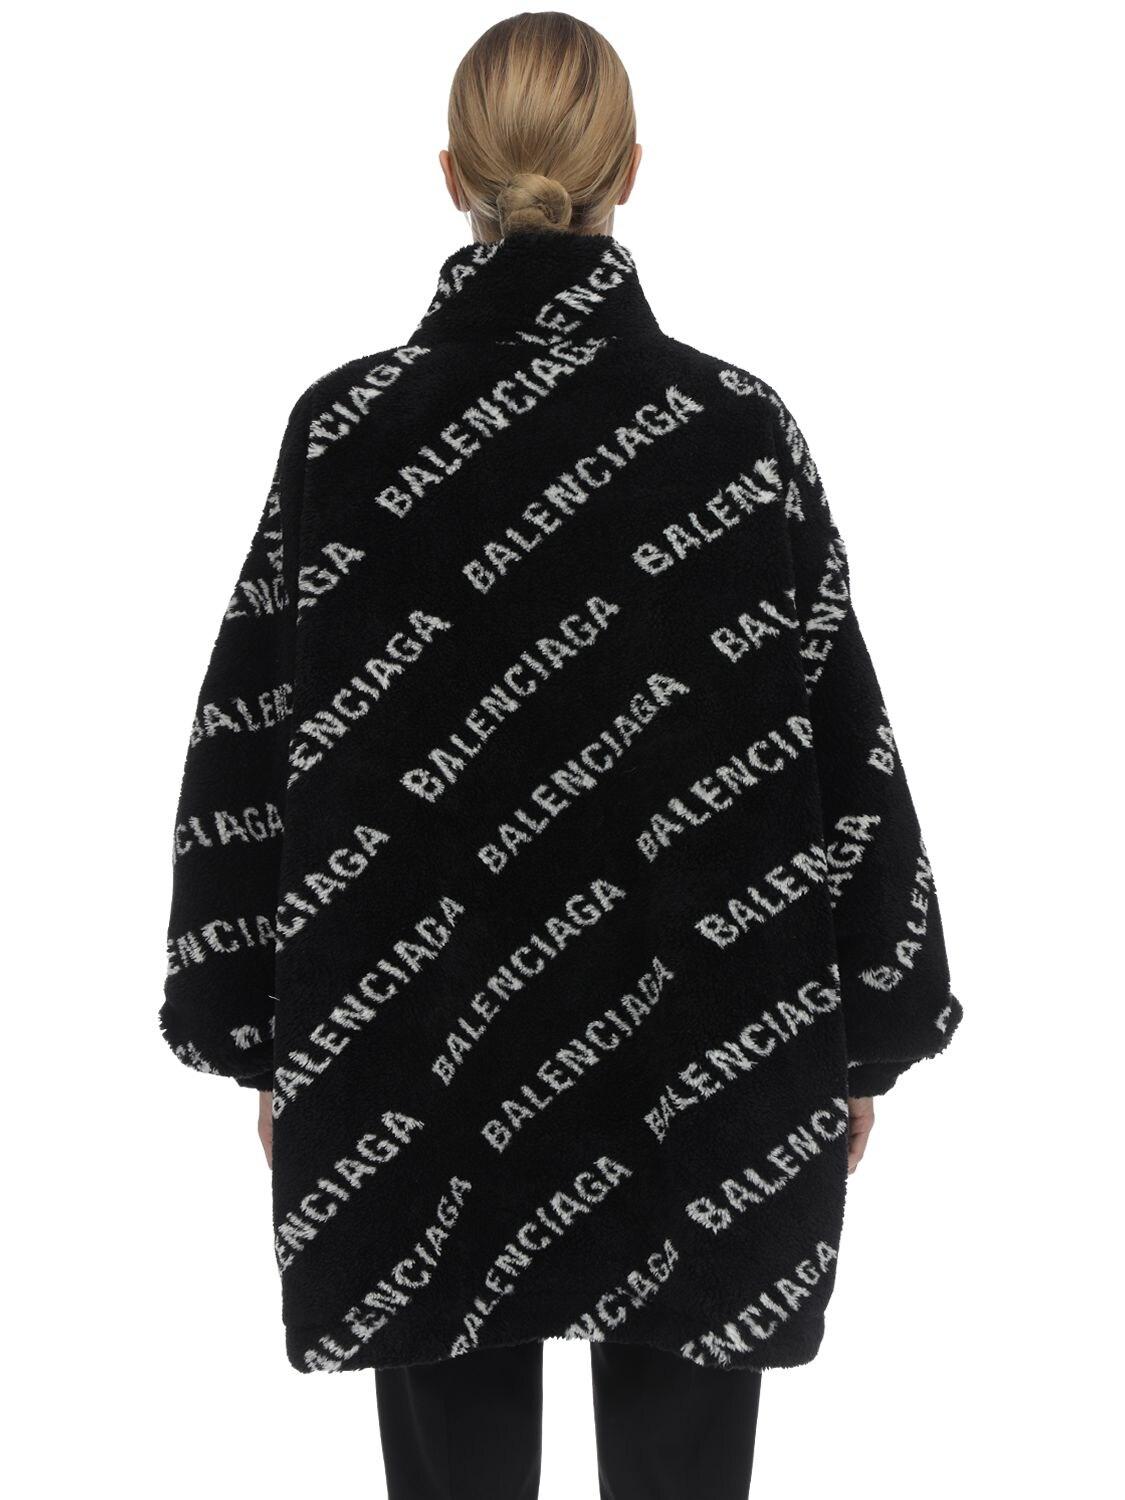 Balenciaga Logo Printed Zip-up Faux Fur Jacket in Black/White (Black ...